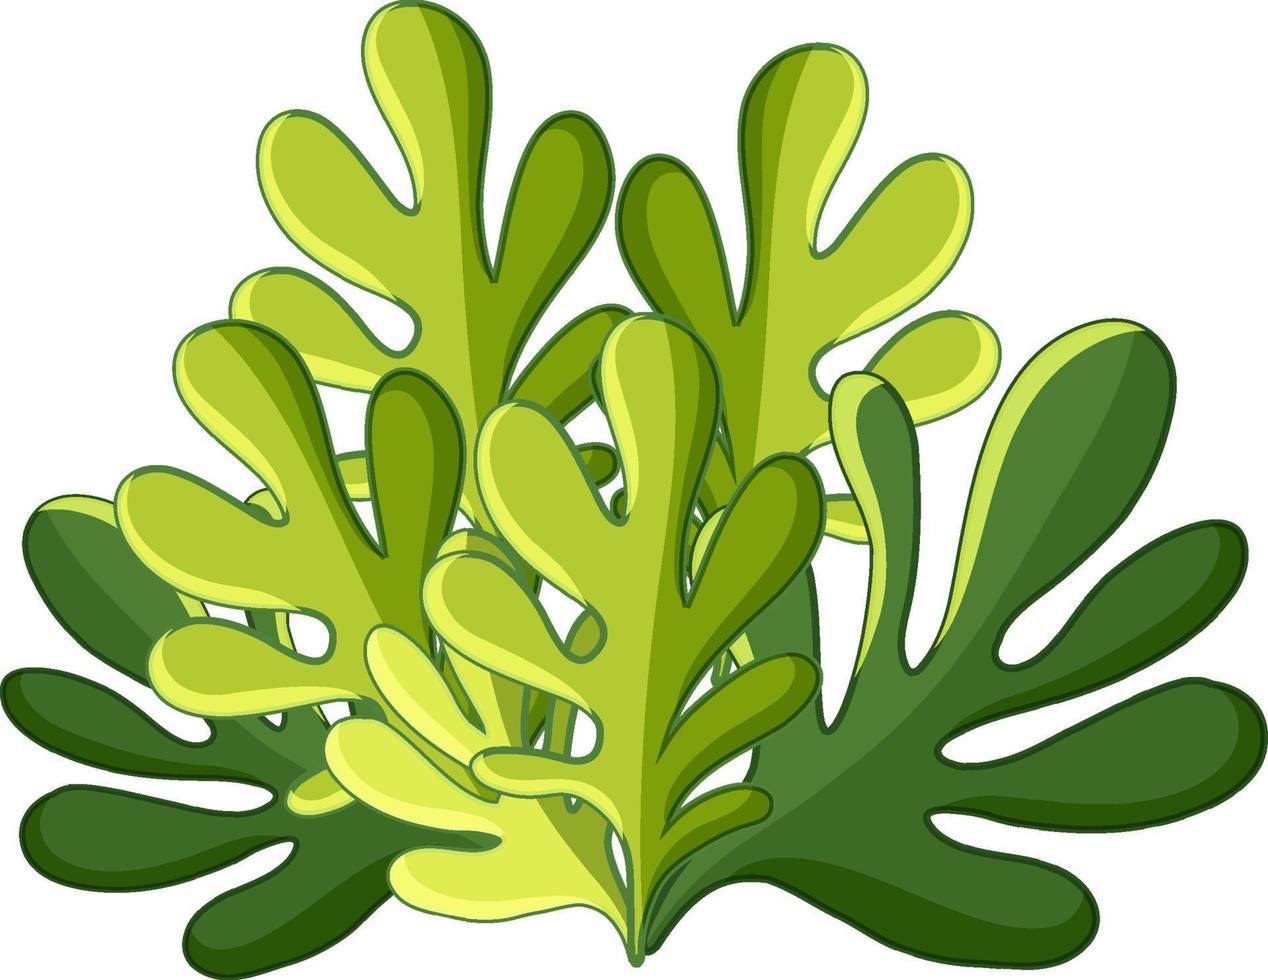 Green bush in cartoon style vector